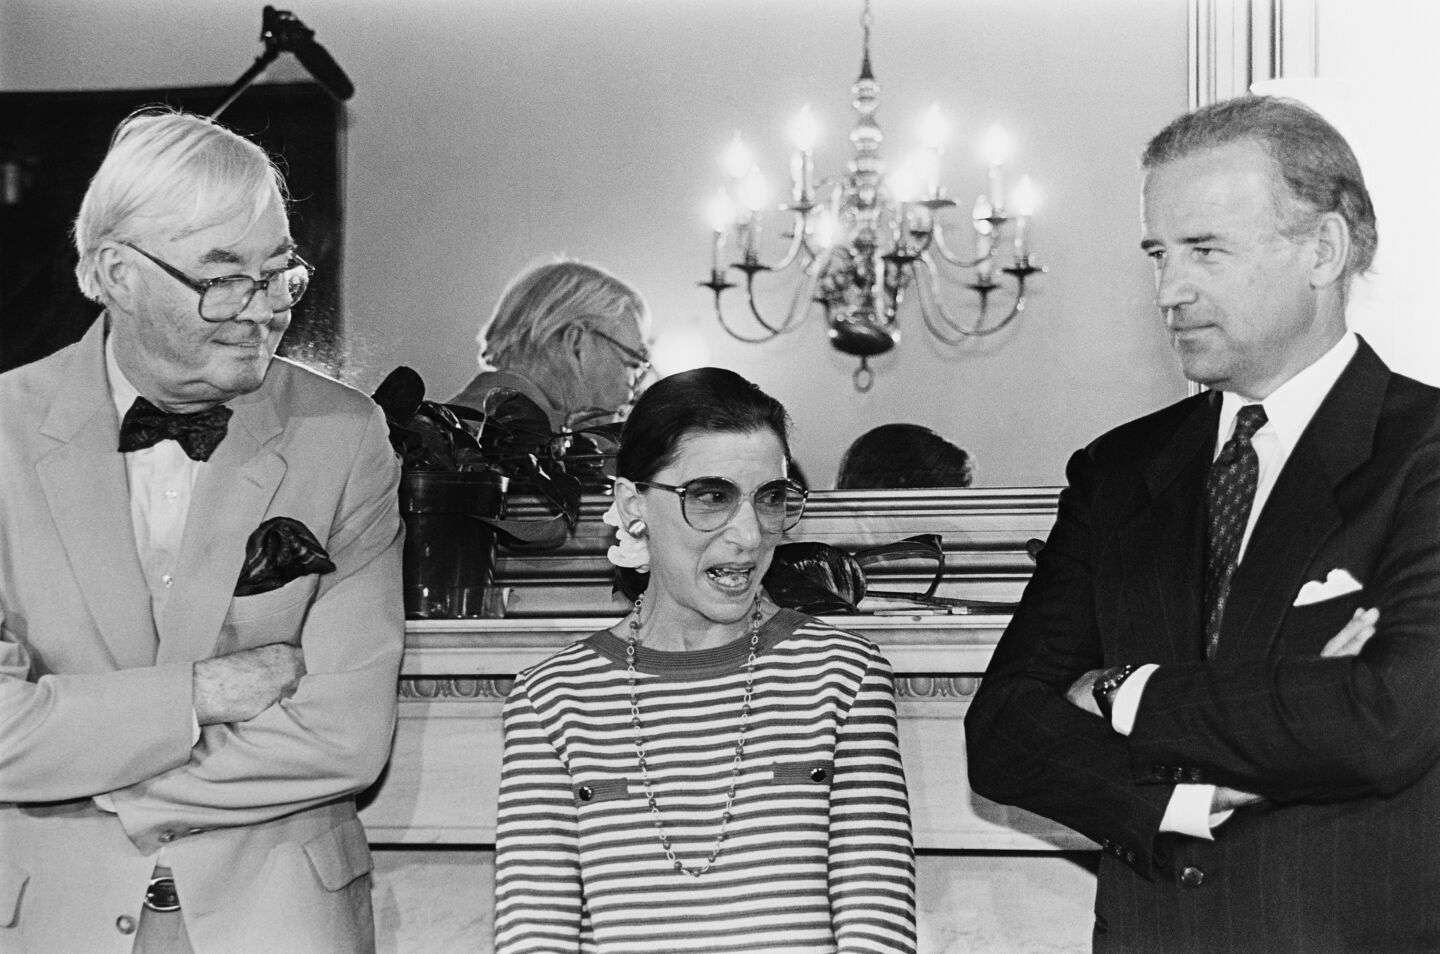 Black and white photo of Ruth Bader Ginsburg standing between Senators Daniel Patrick Moynihan and Joe Biden